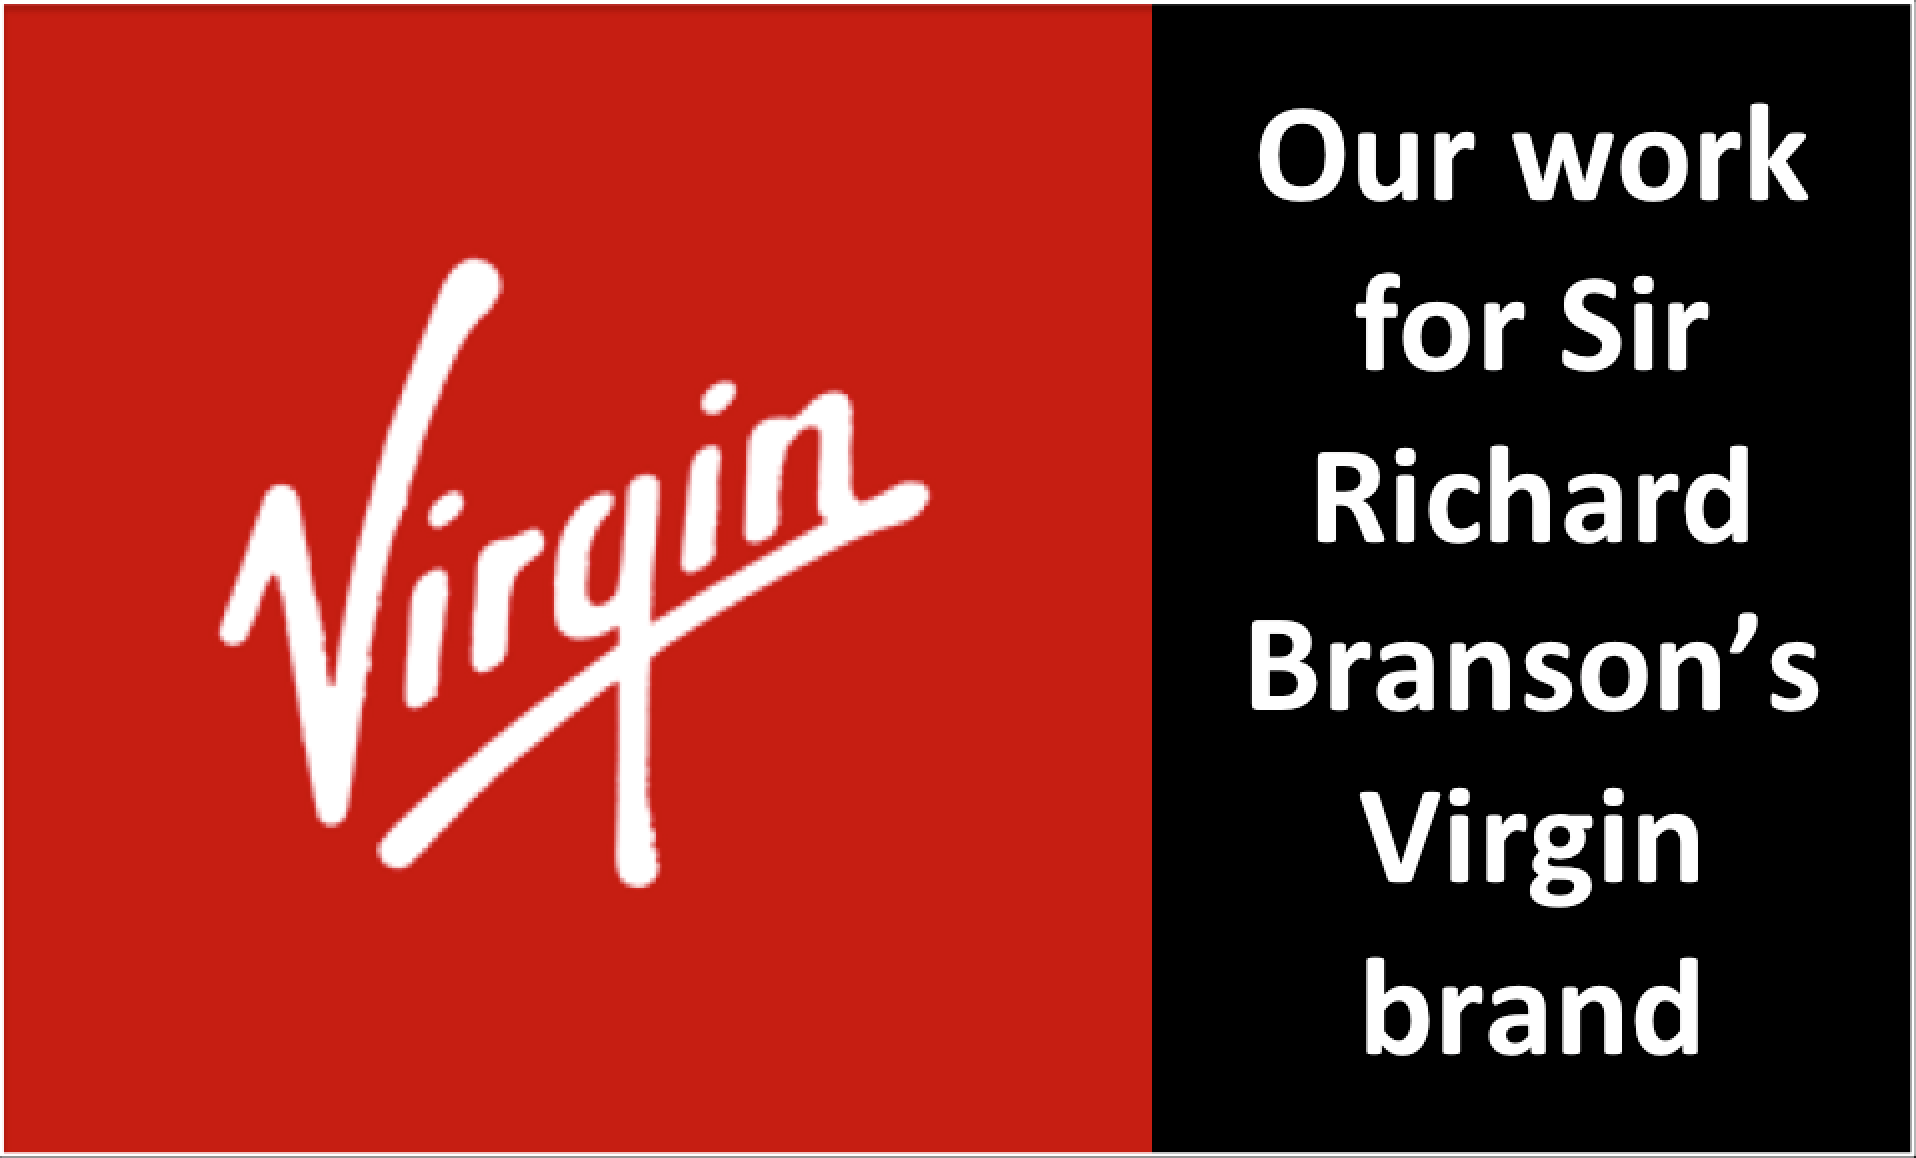 Peter Cook's work for Sir Richard Branson's Virgin Brand